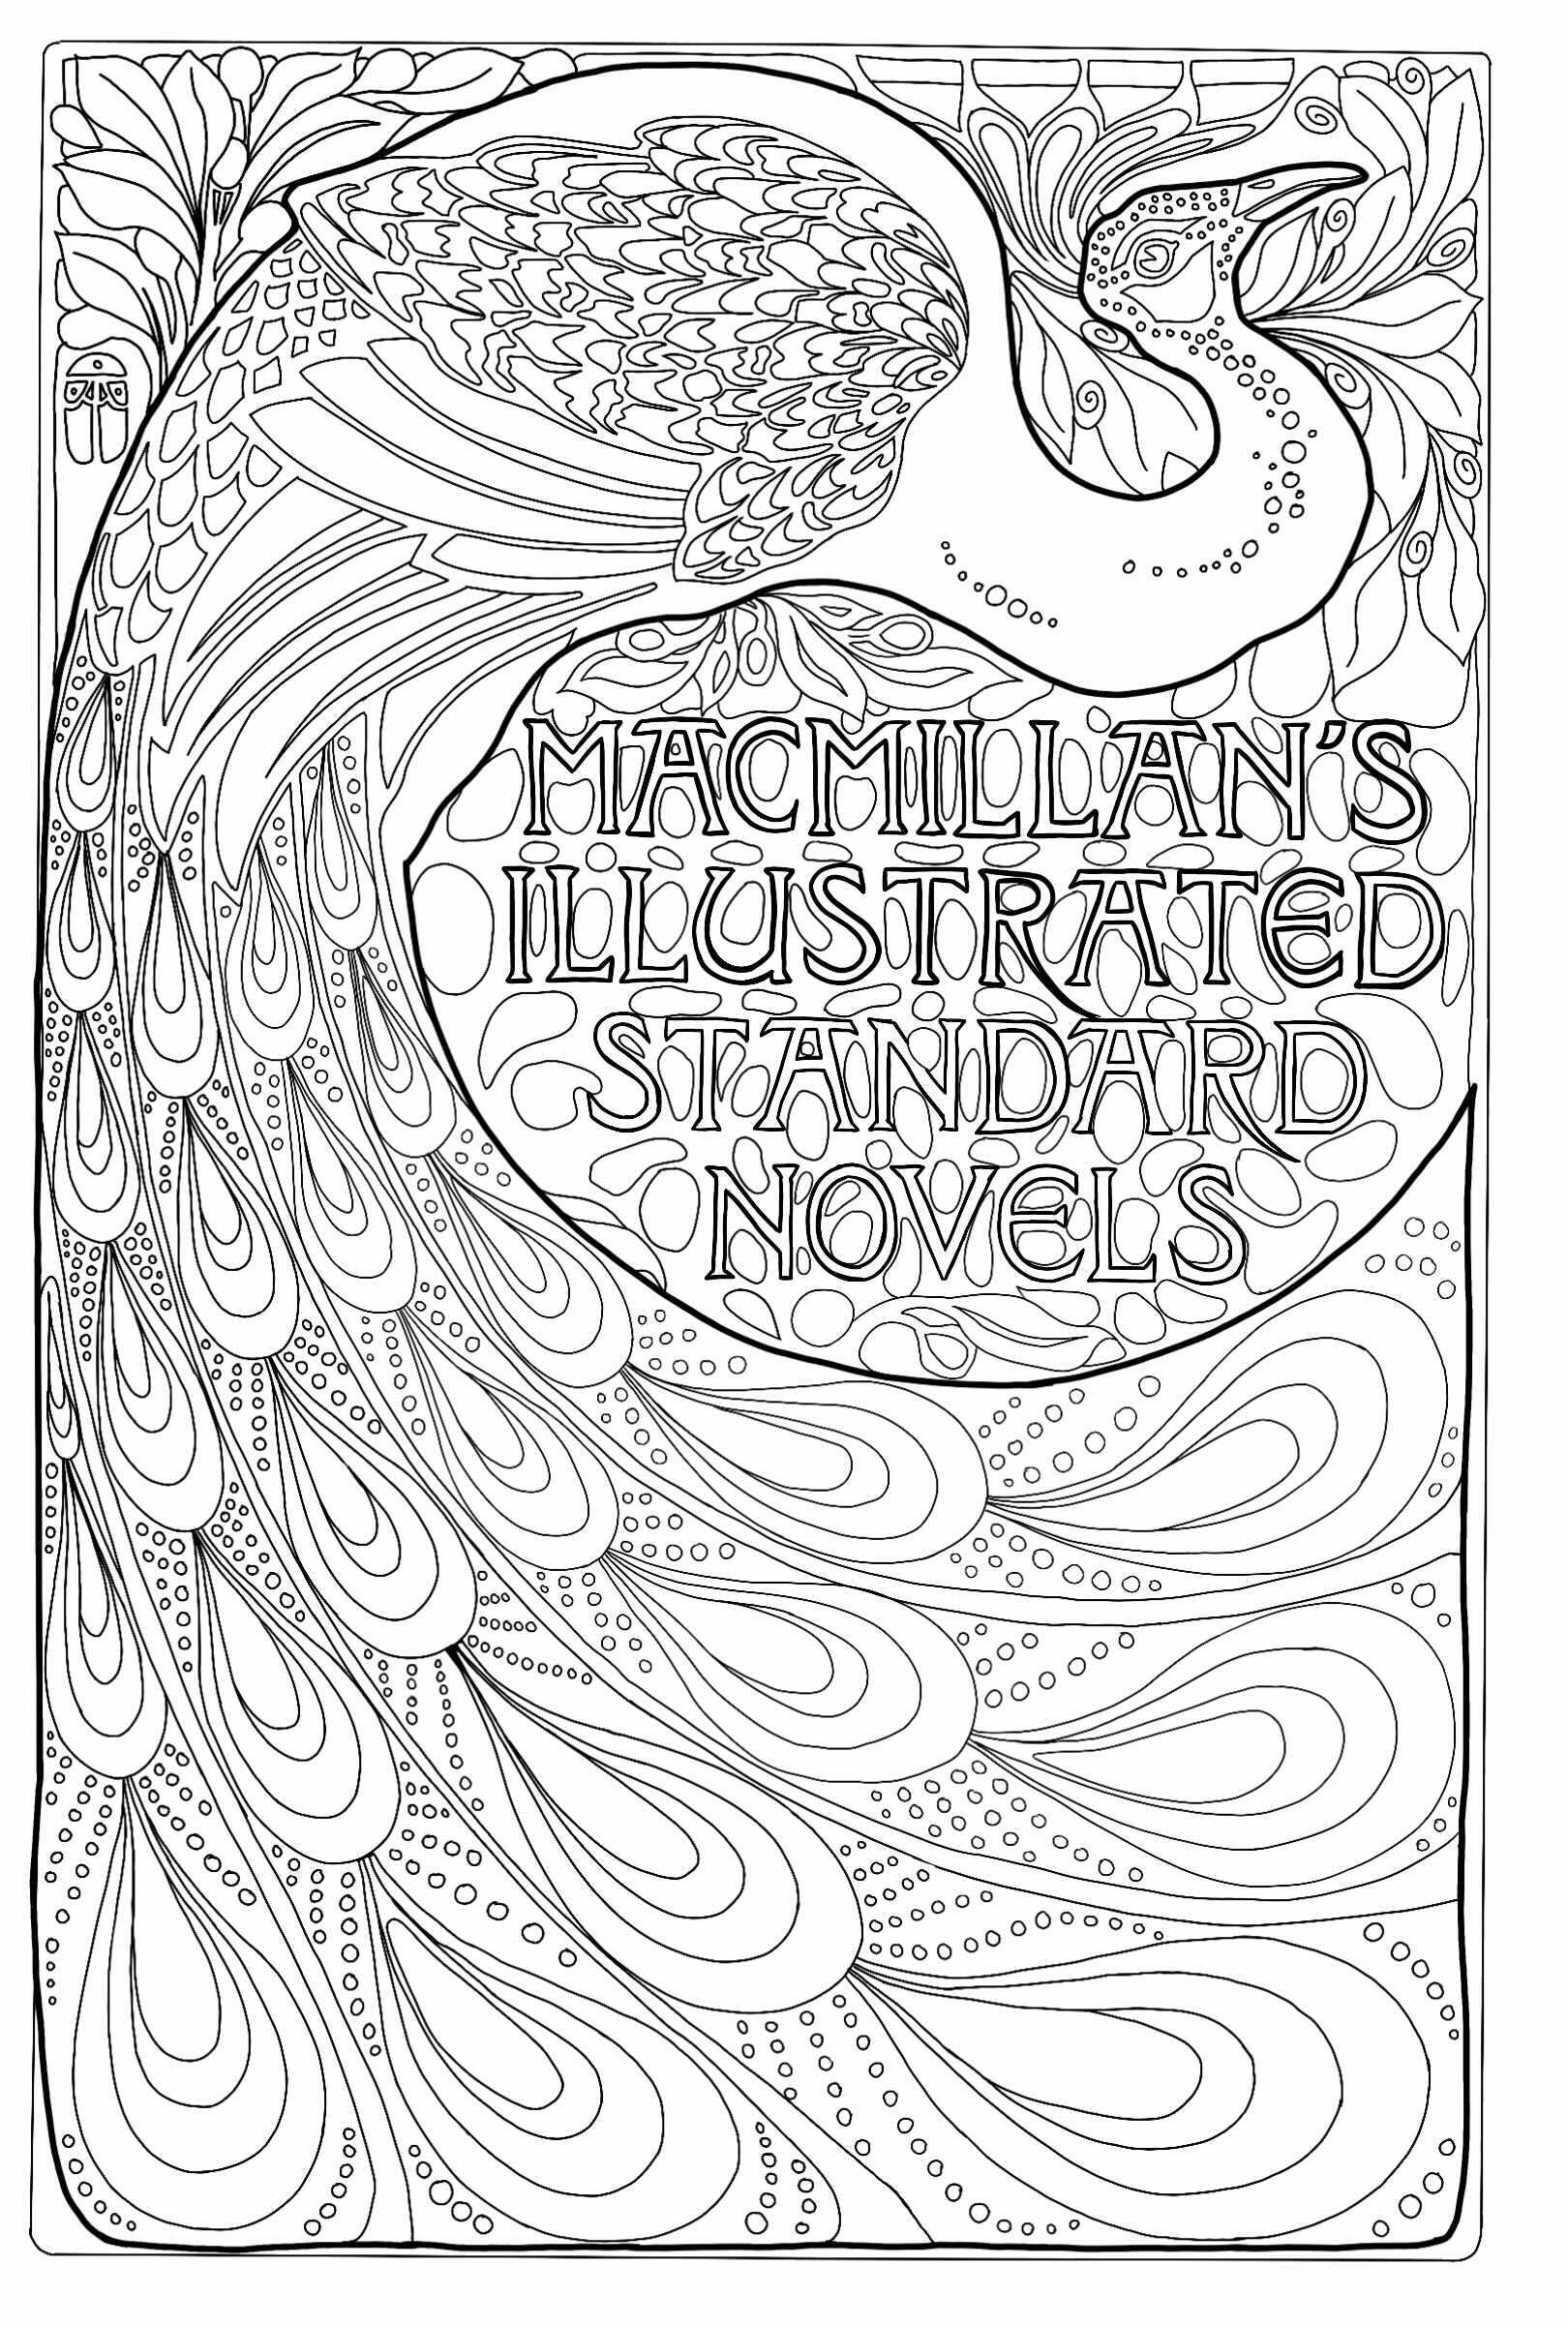 Mac. Millan's Illustrated Standard Novels: Art Nouveau book cover with peacock (1896). Created by Albert Angus Turbayne, American illustrator (1866, 1940), Artist : Louunatik